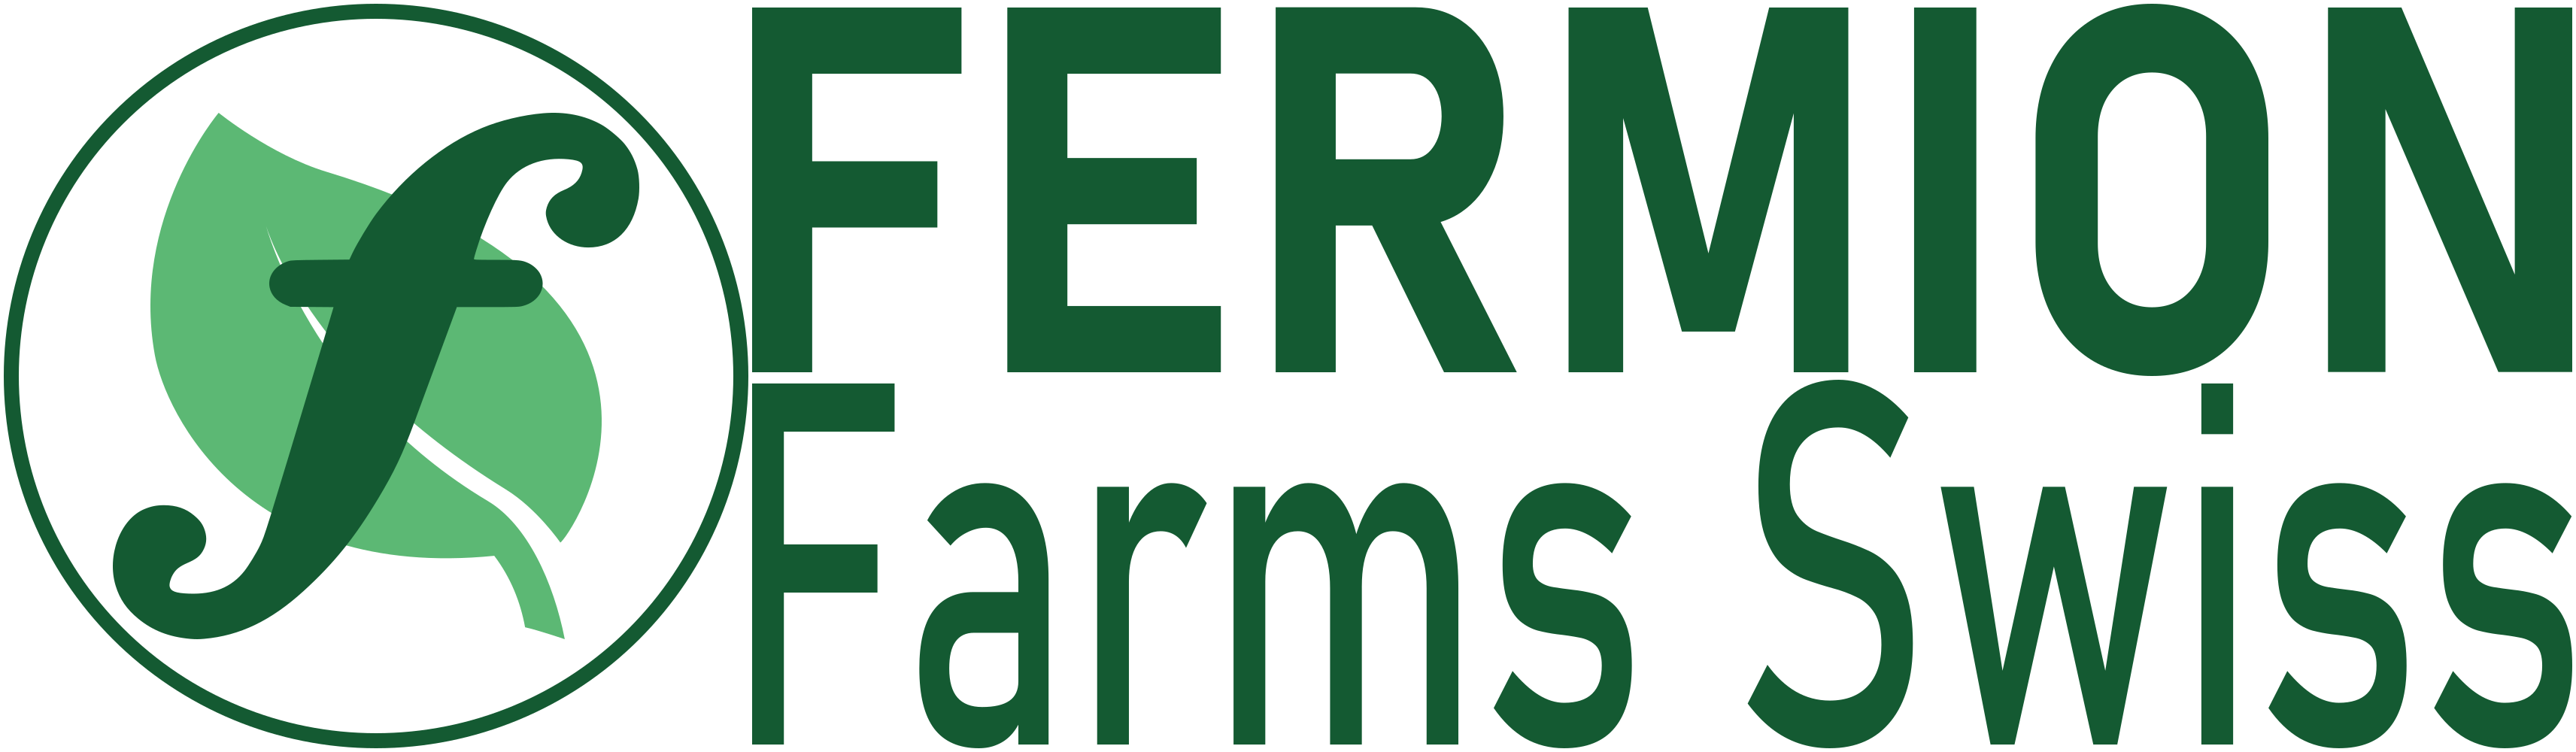 Fermion Farms